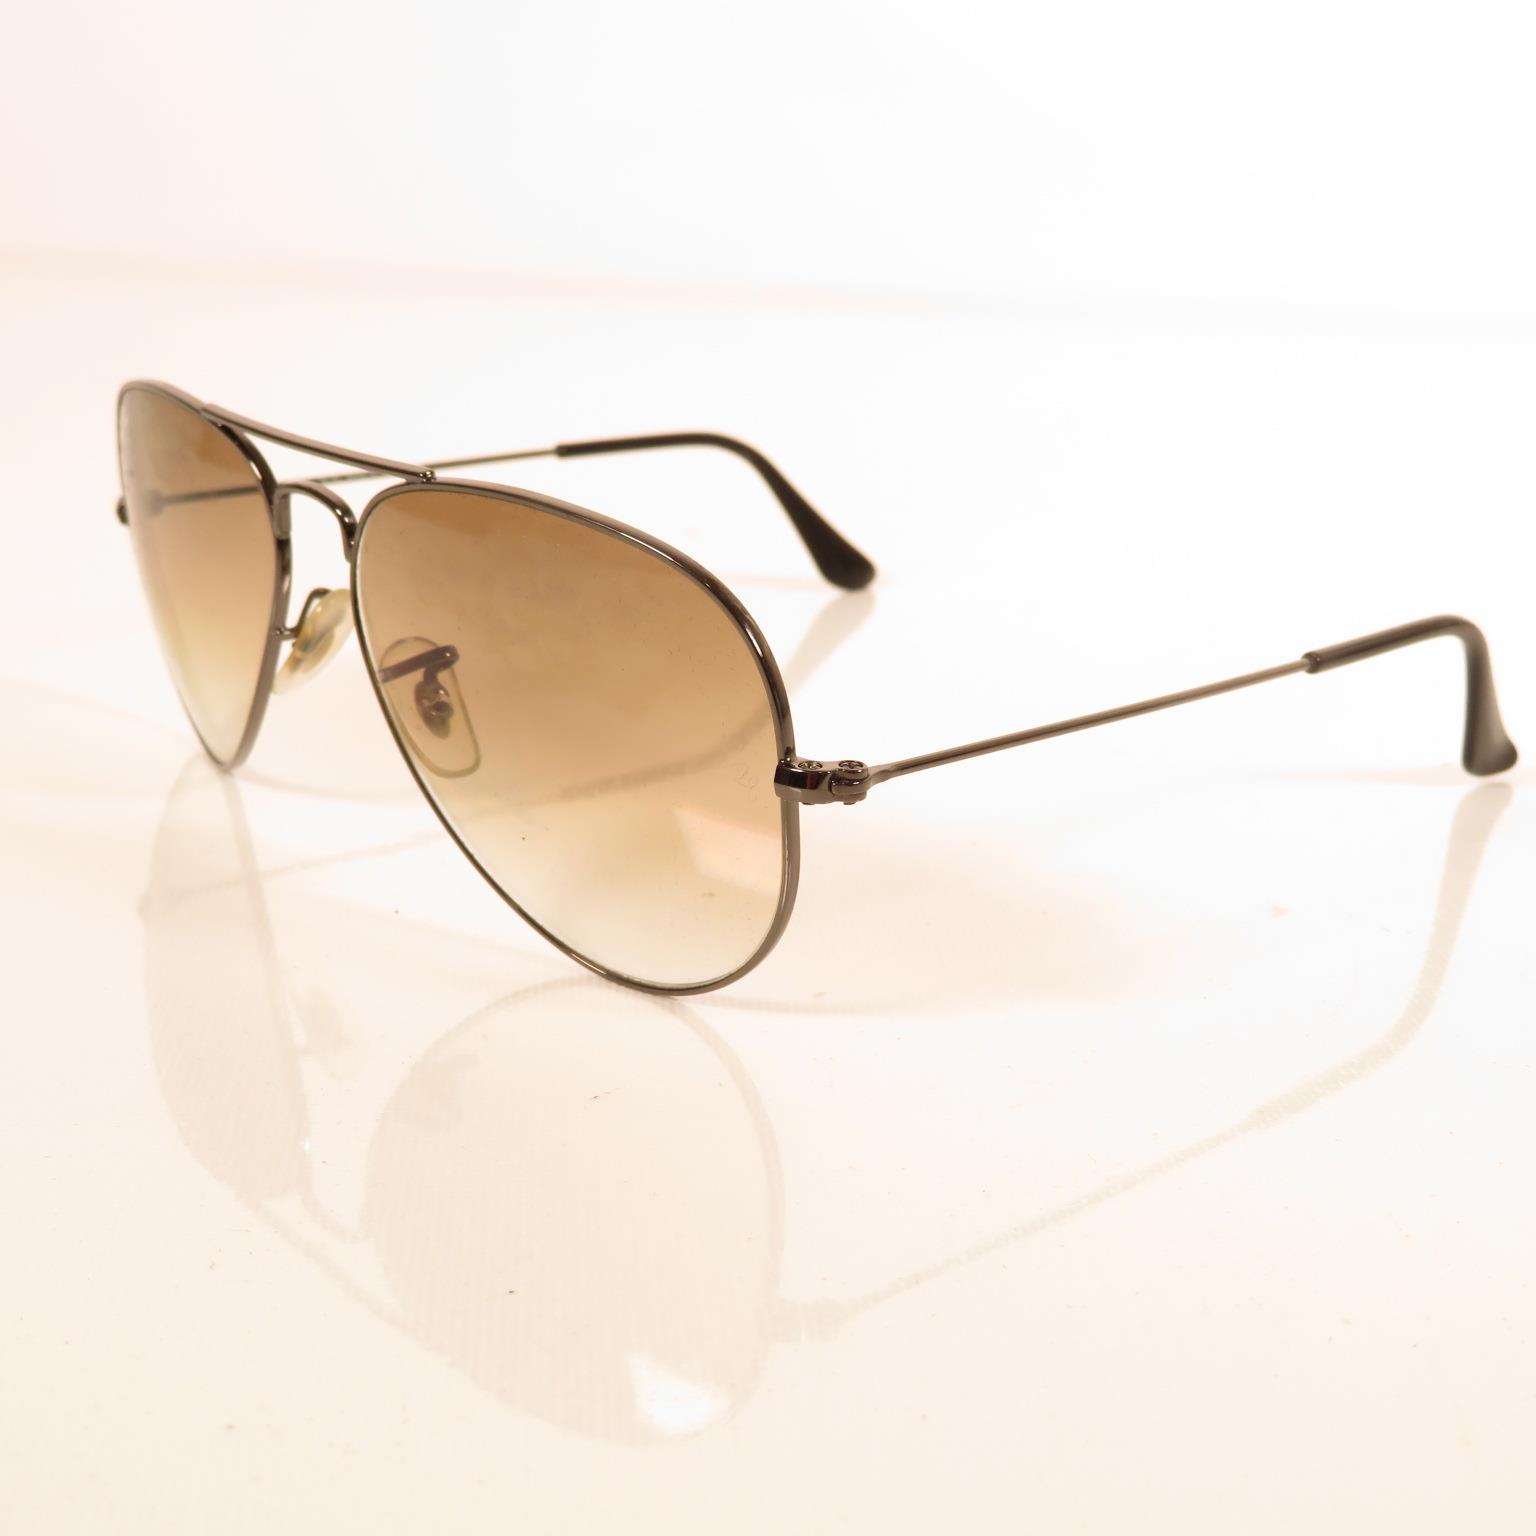 5x pairs Ray Ban sunglasses - - Image 21 of 23